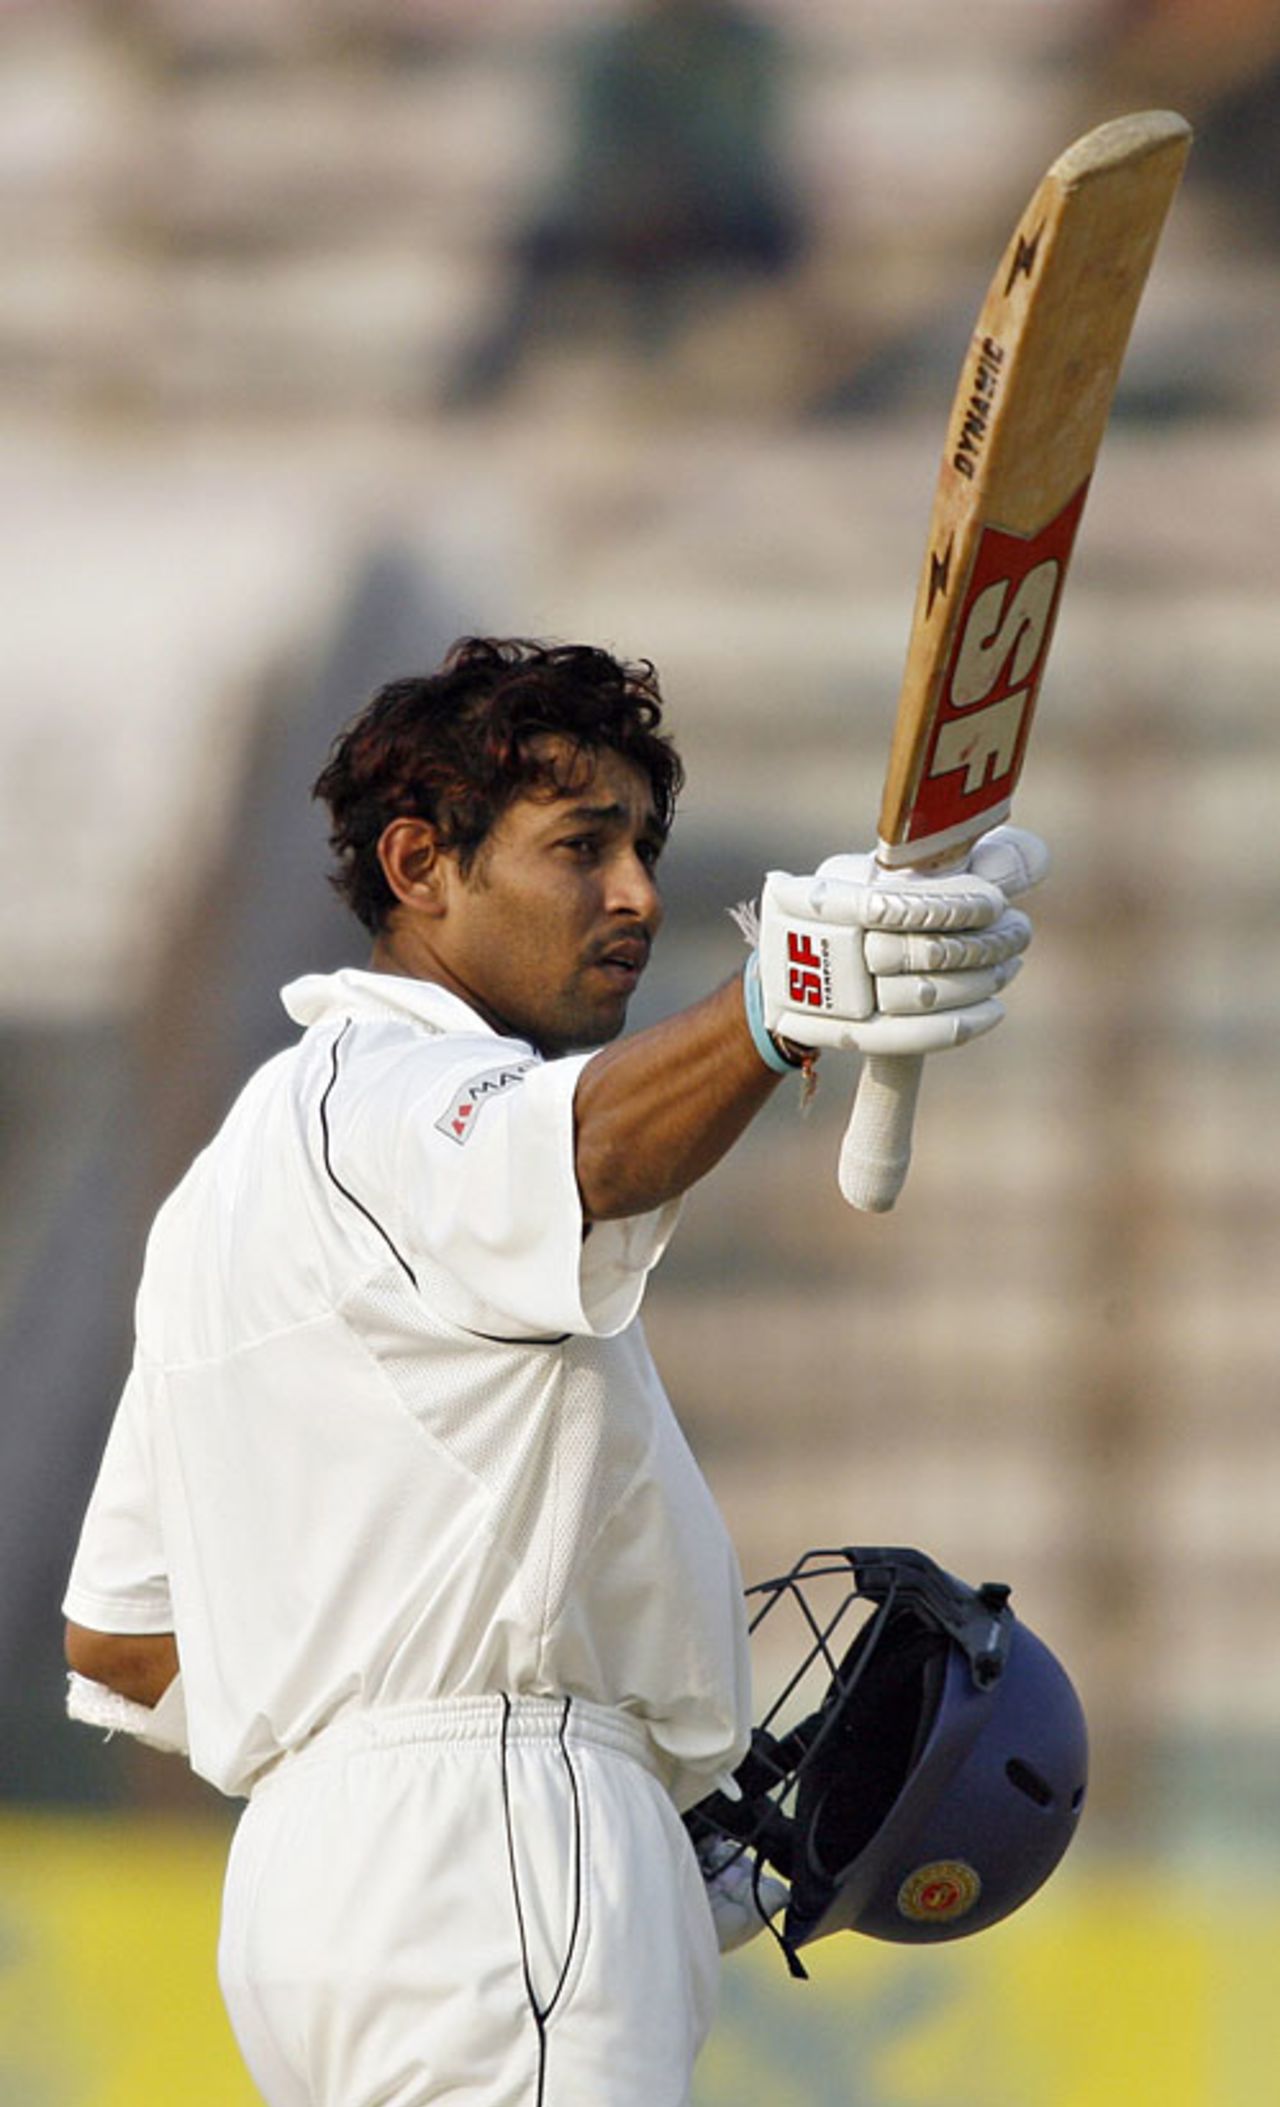 Tillakaratne Dilshan raises his bat after reaching his century, Bangladesh v Sri Lanka, 2nd Test, Chittagong, 3rd day, January 5, 2008